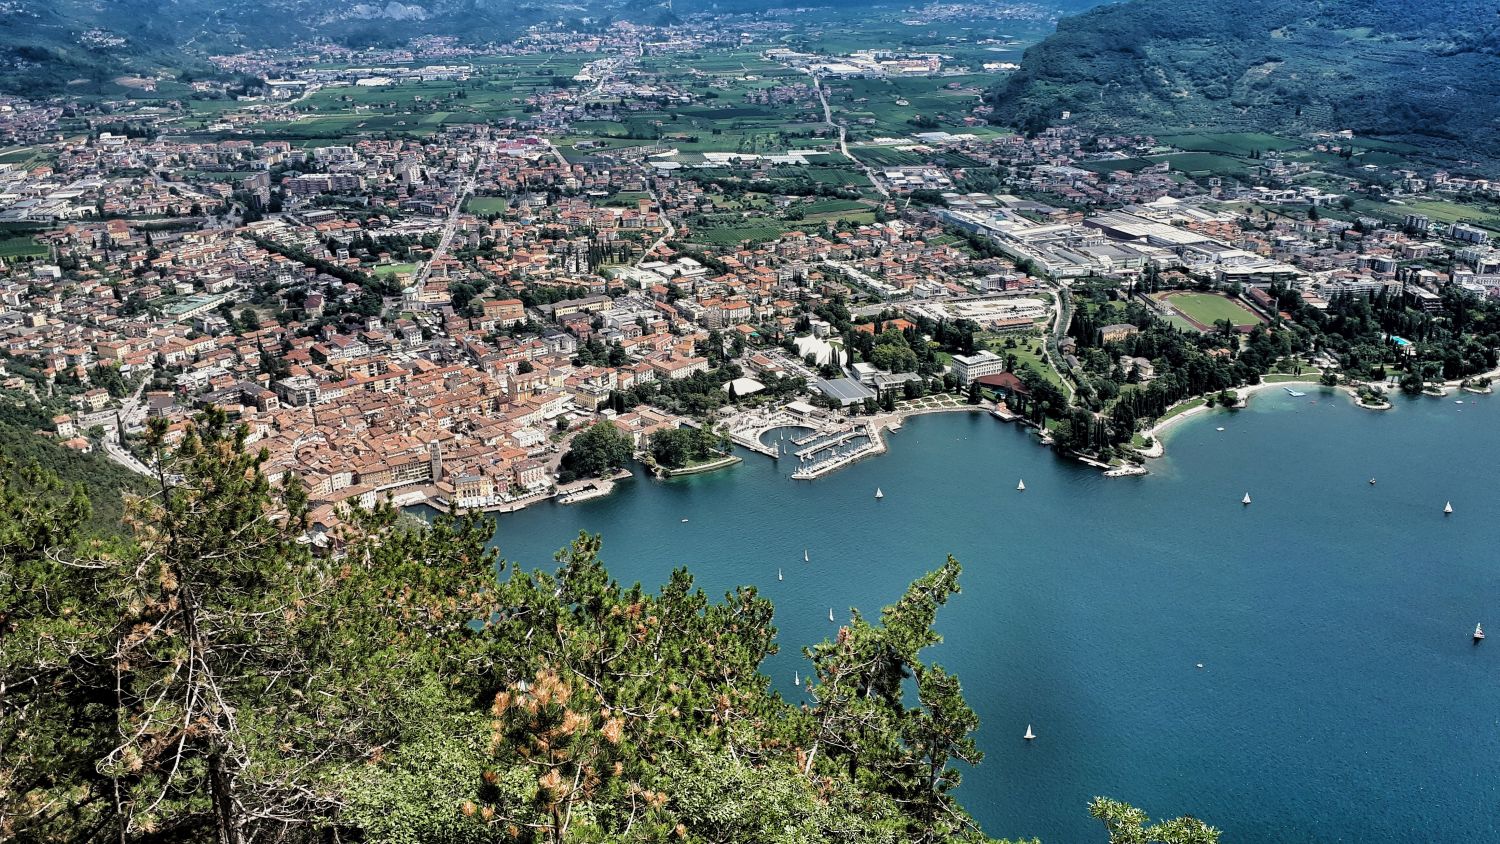 Riva del Garda (fot. Paweł Klimek)